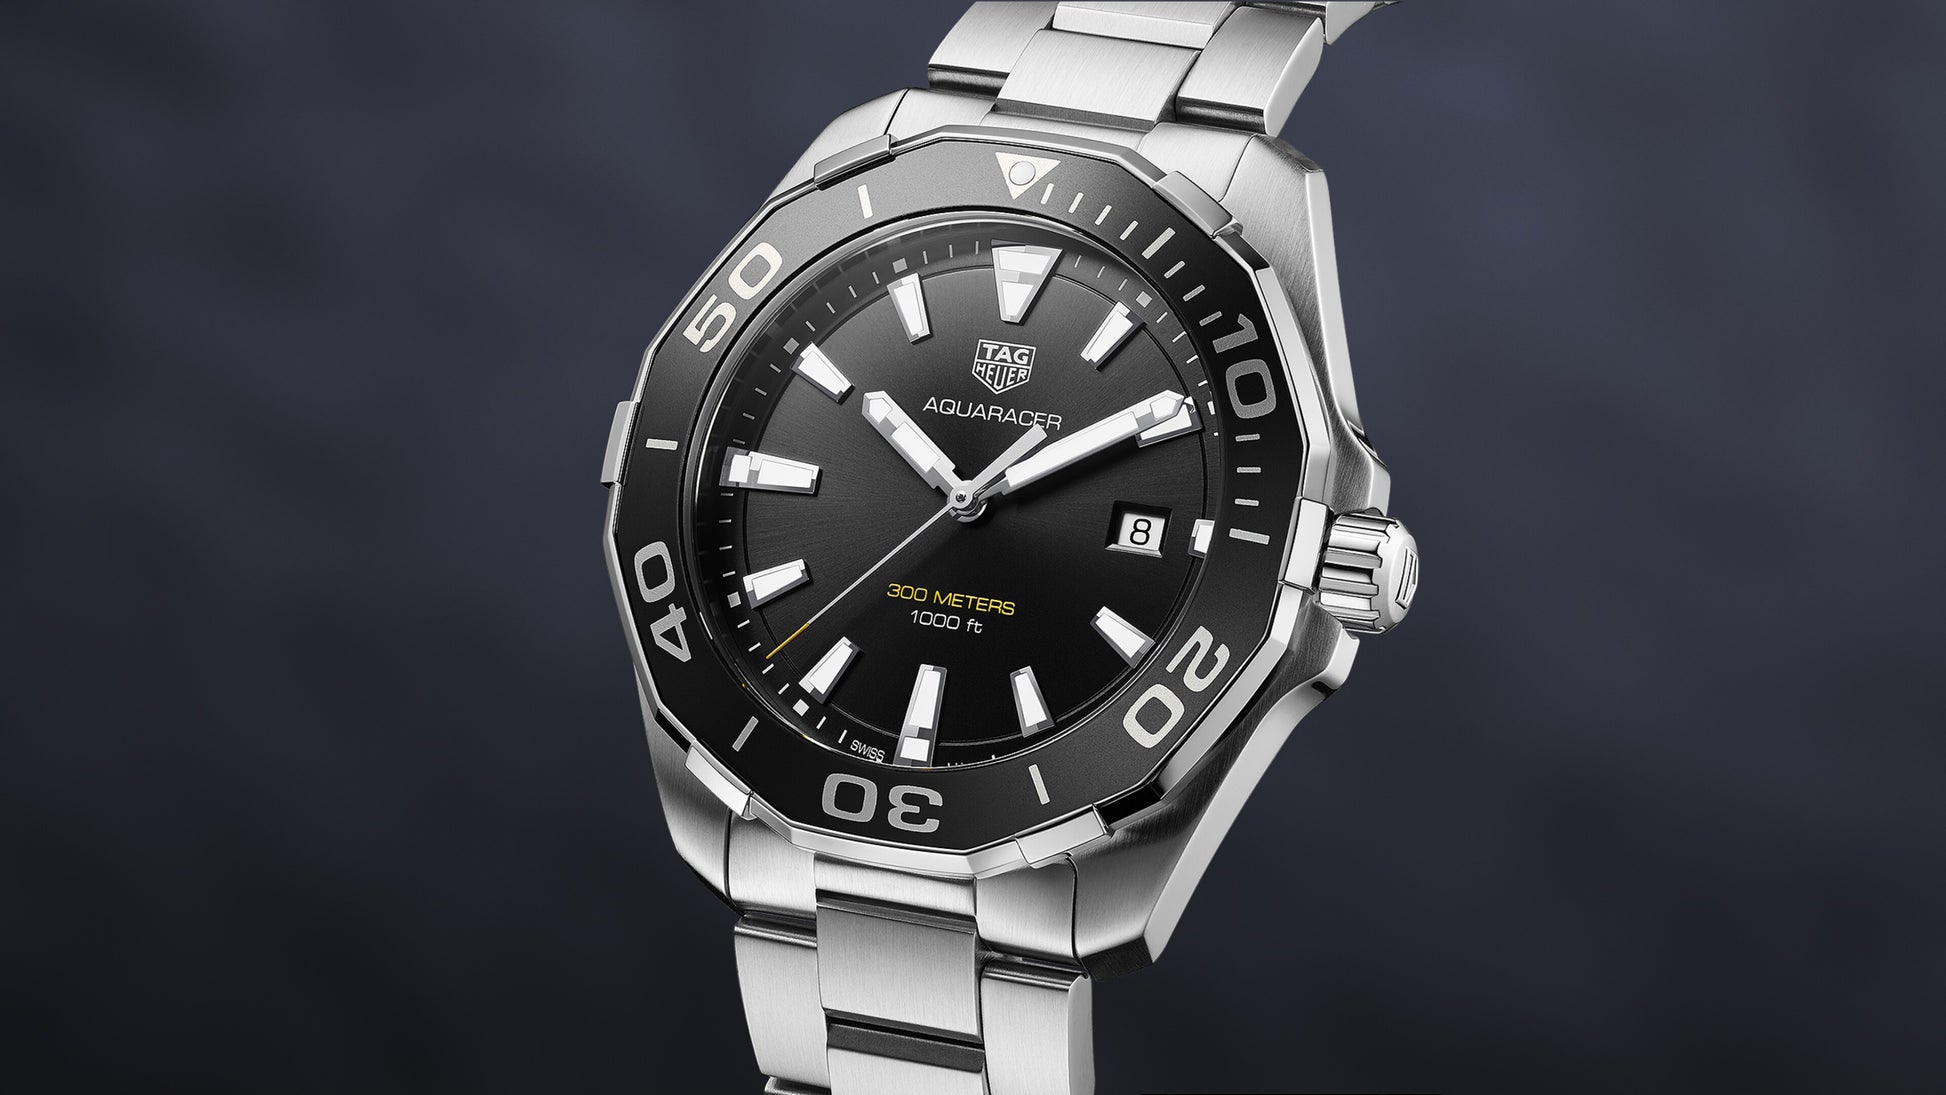 Buy Tag Heuer Aquaracer Black Dial Silver Steel Strap Watch for Men - WAY101A.BA0746 in Pakistan